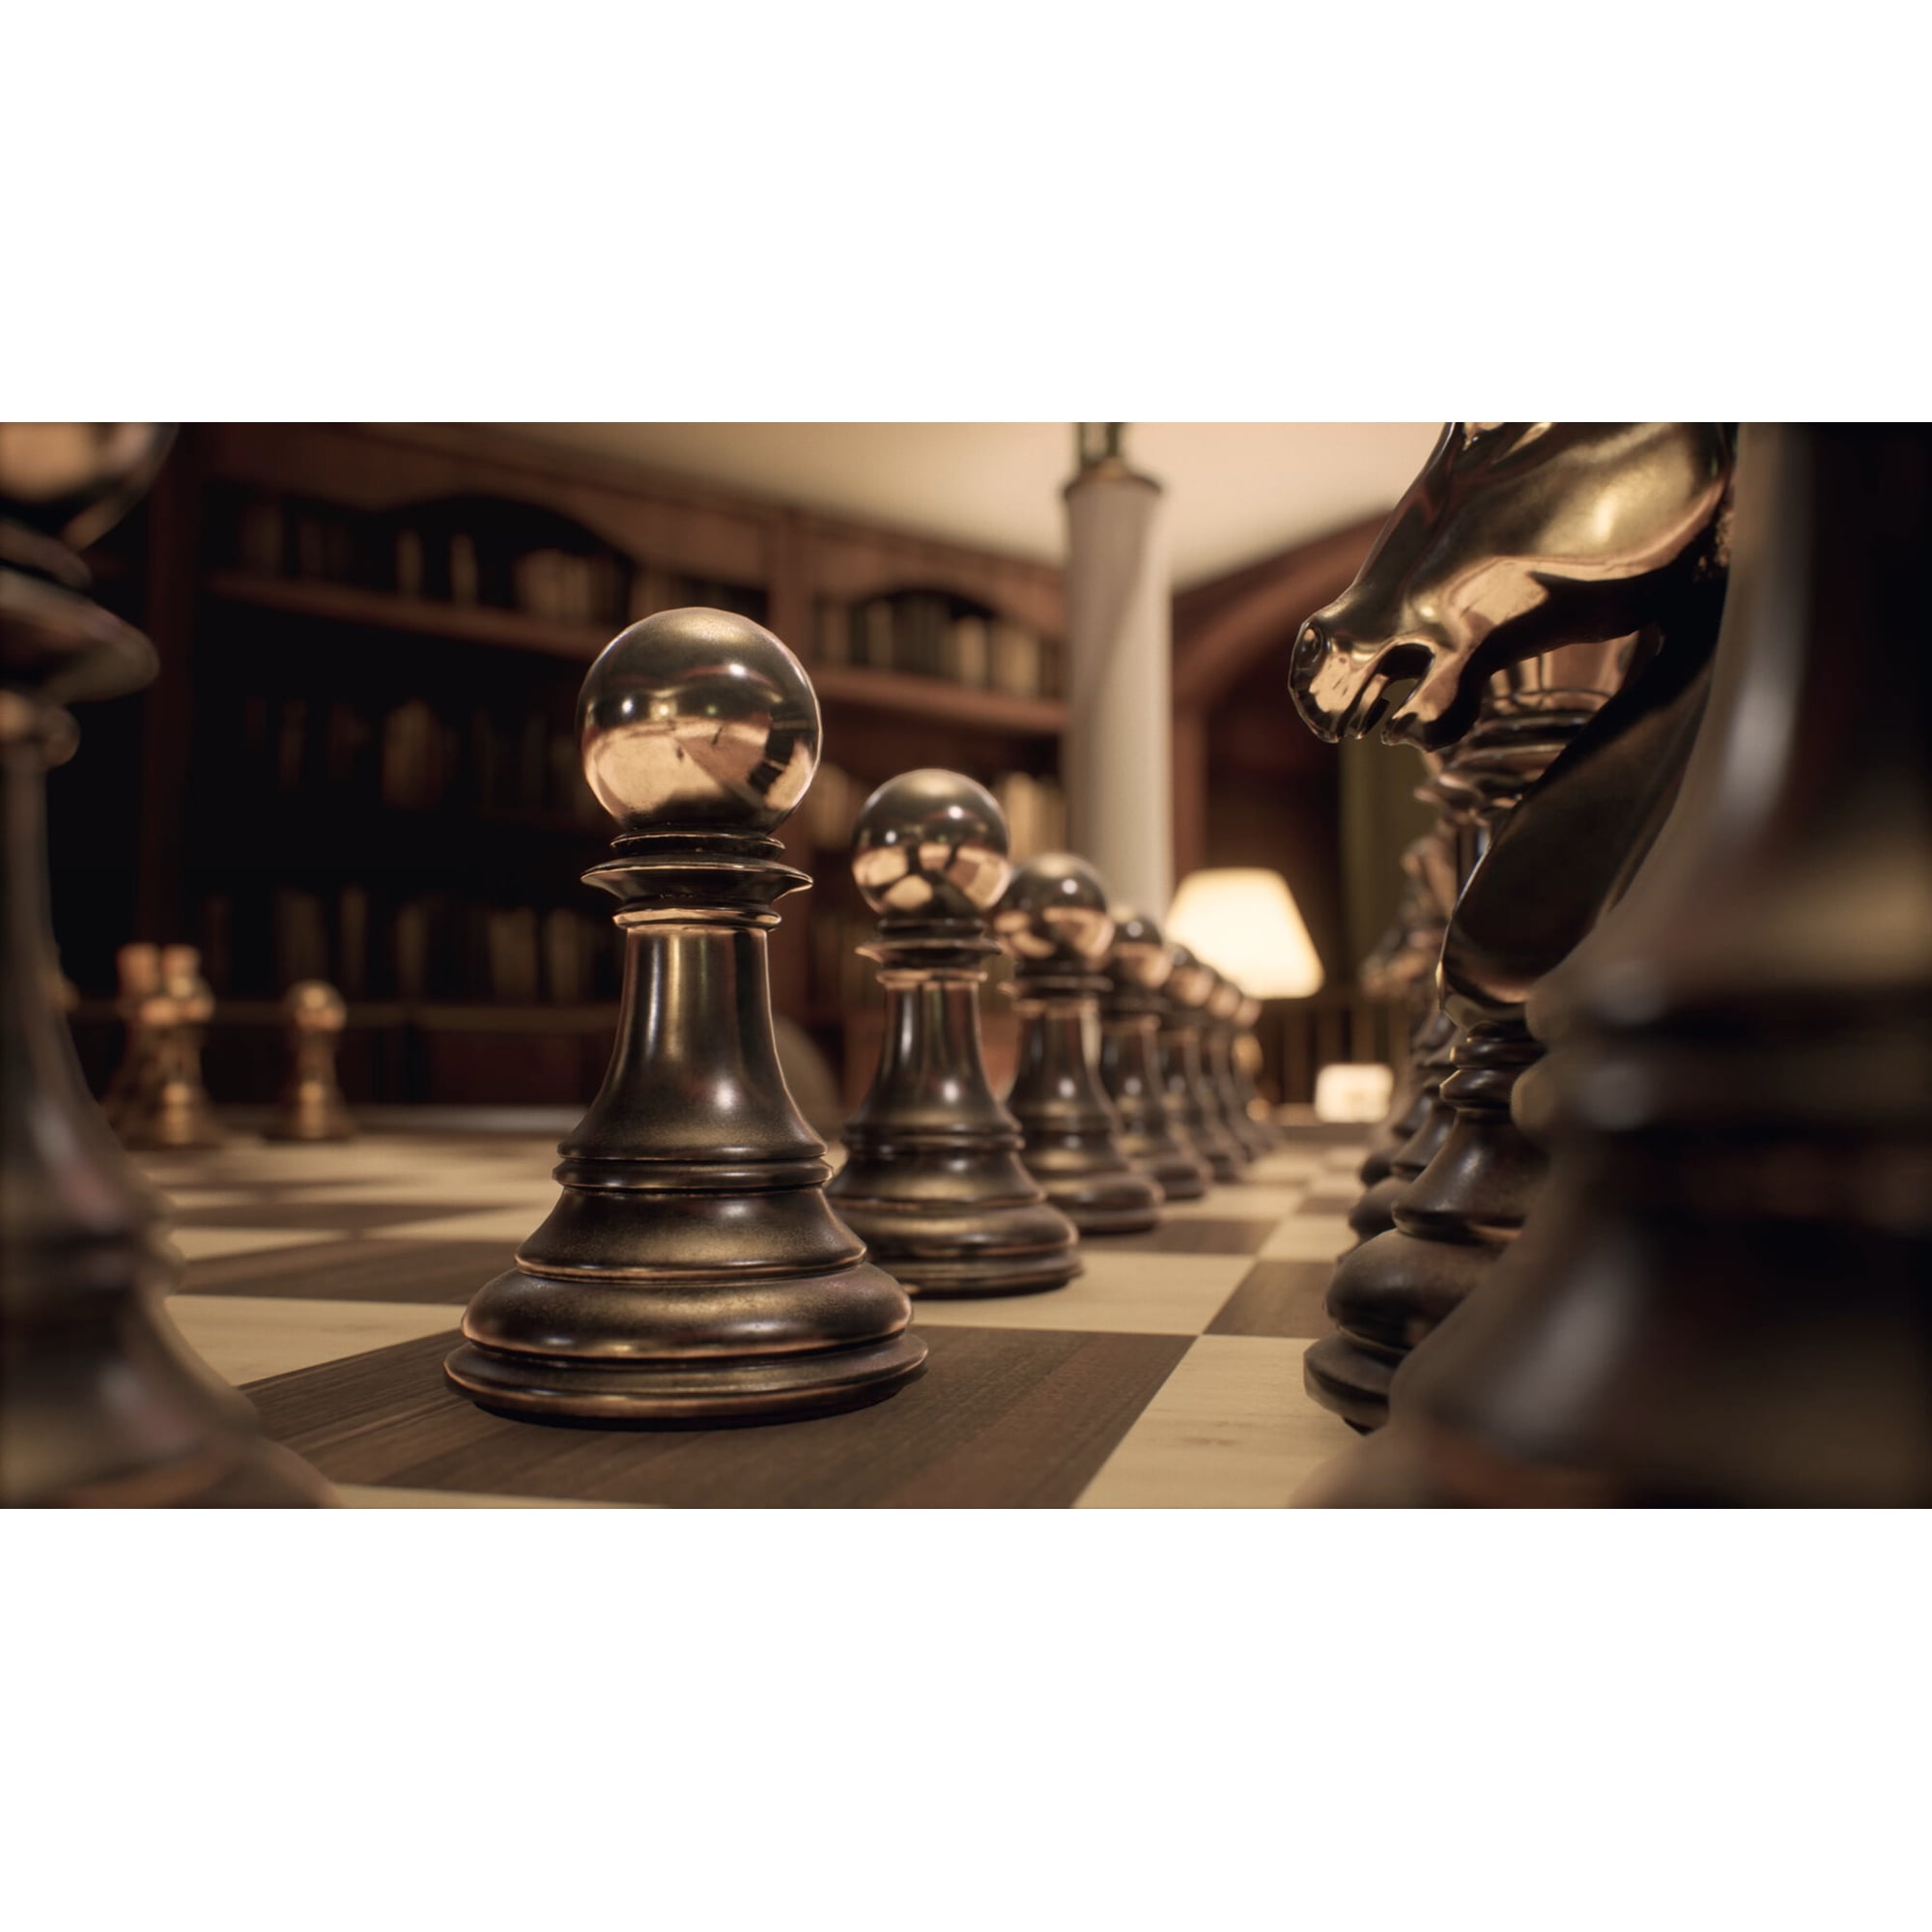 Steam Community :: Chessmaster: Grandmaster Edition